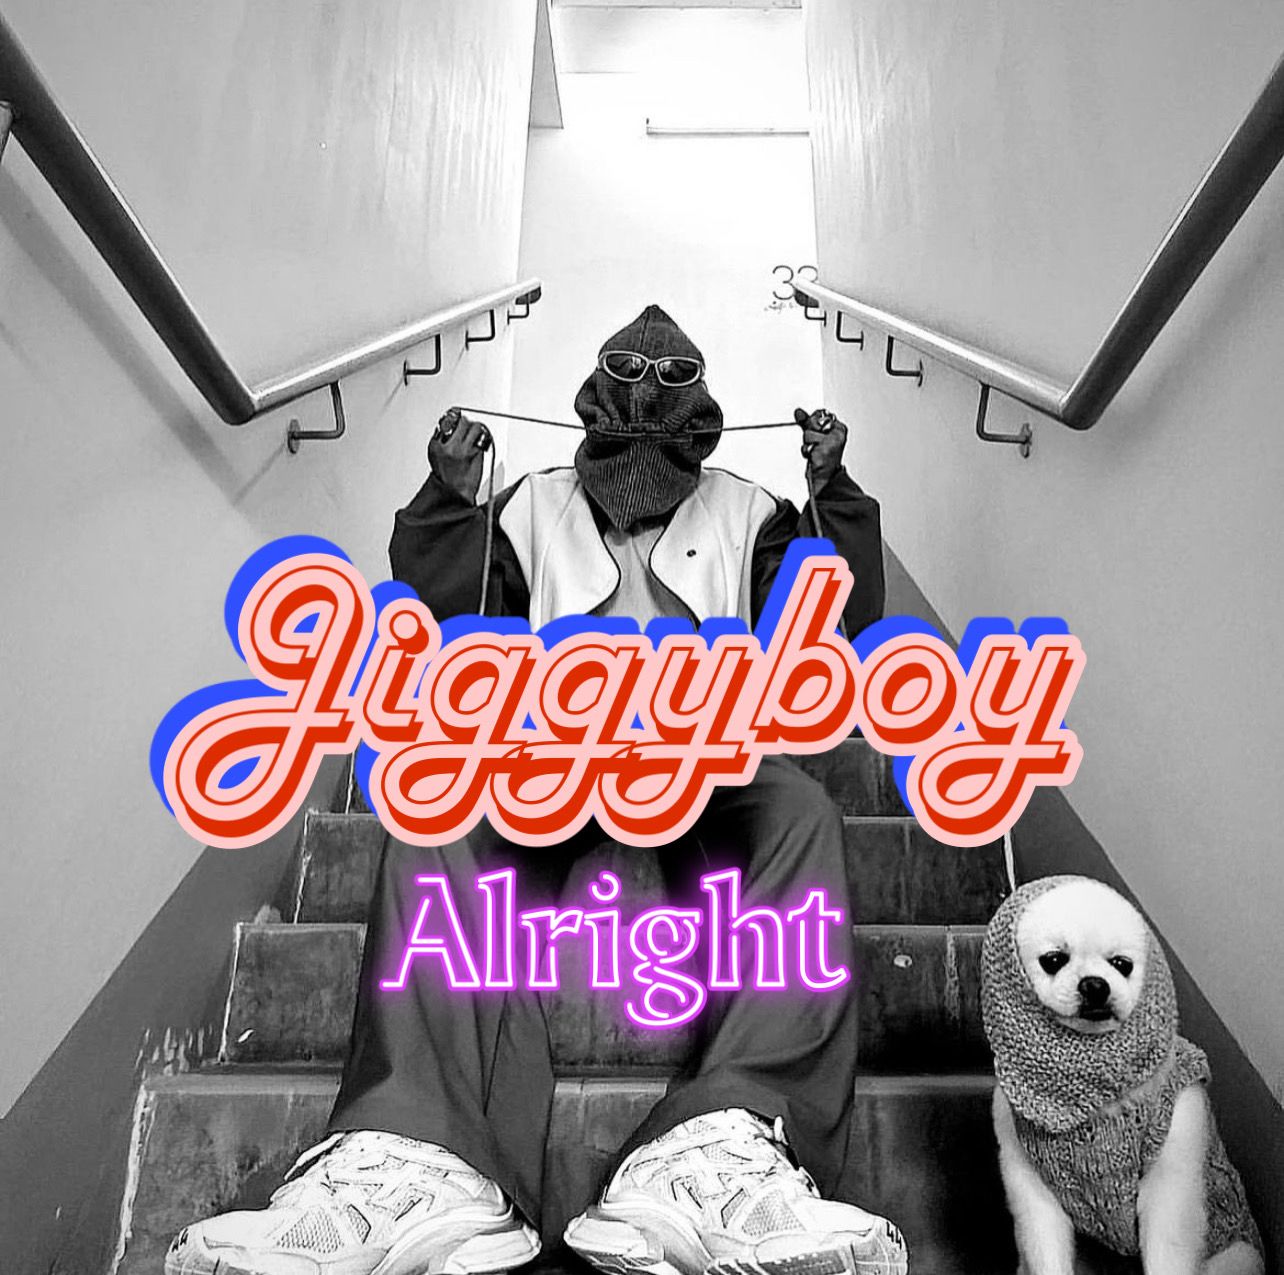 jiggyboy - Alright